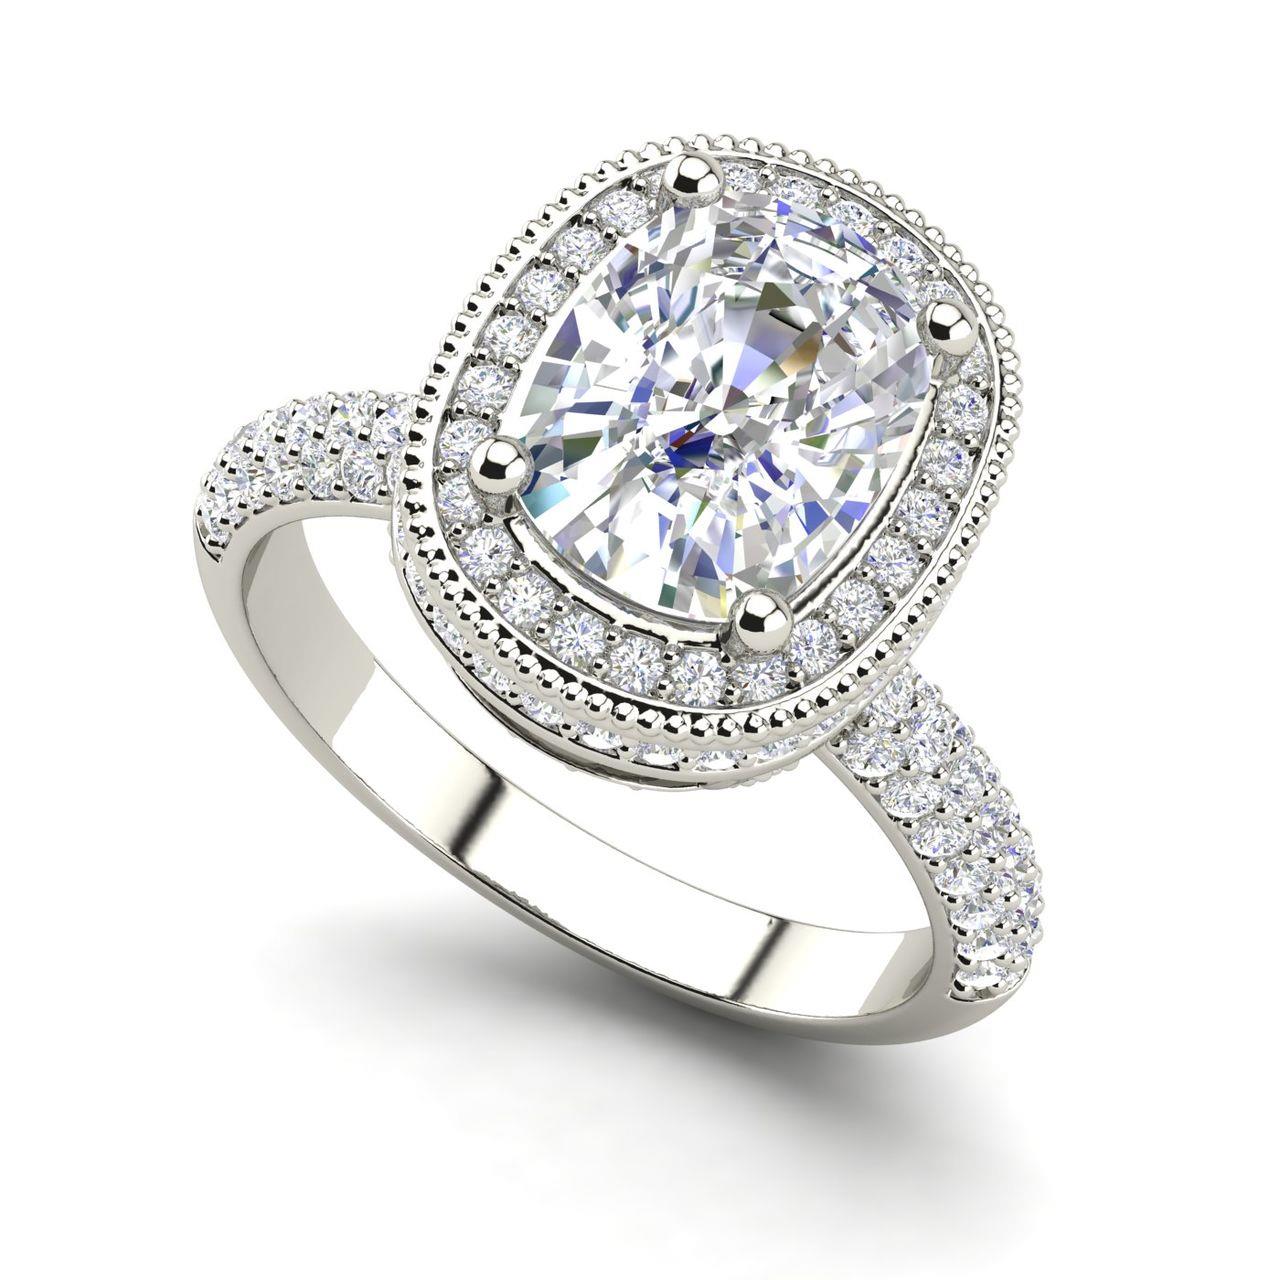 Halo 1.75 Carat Cushion Cut Diamond Engagement Ring